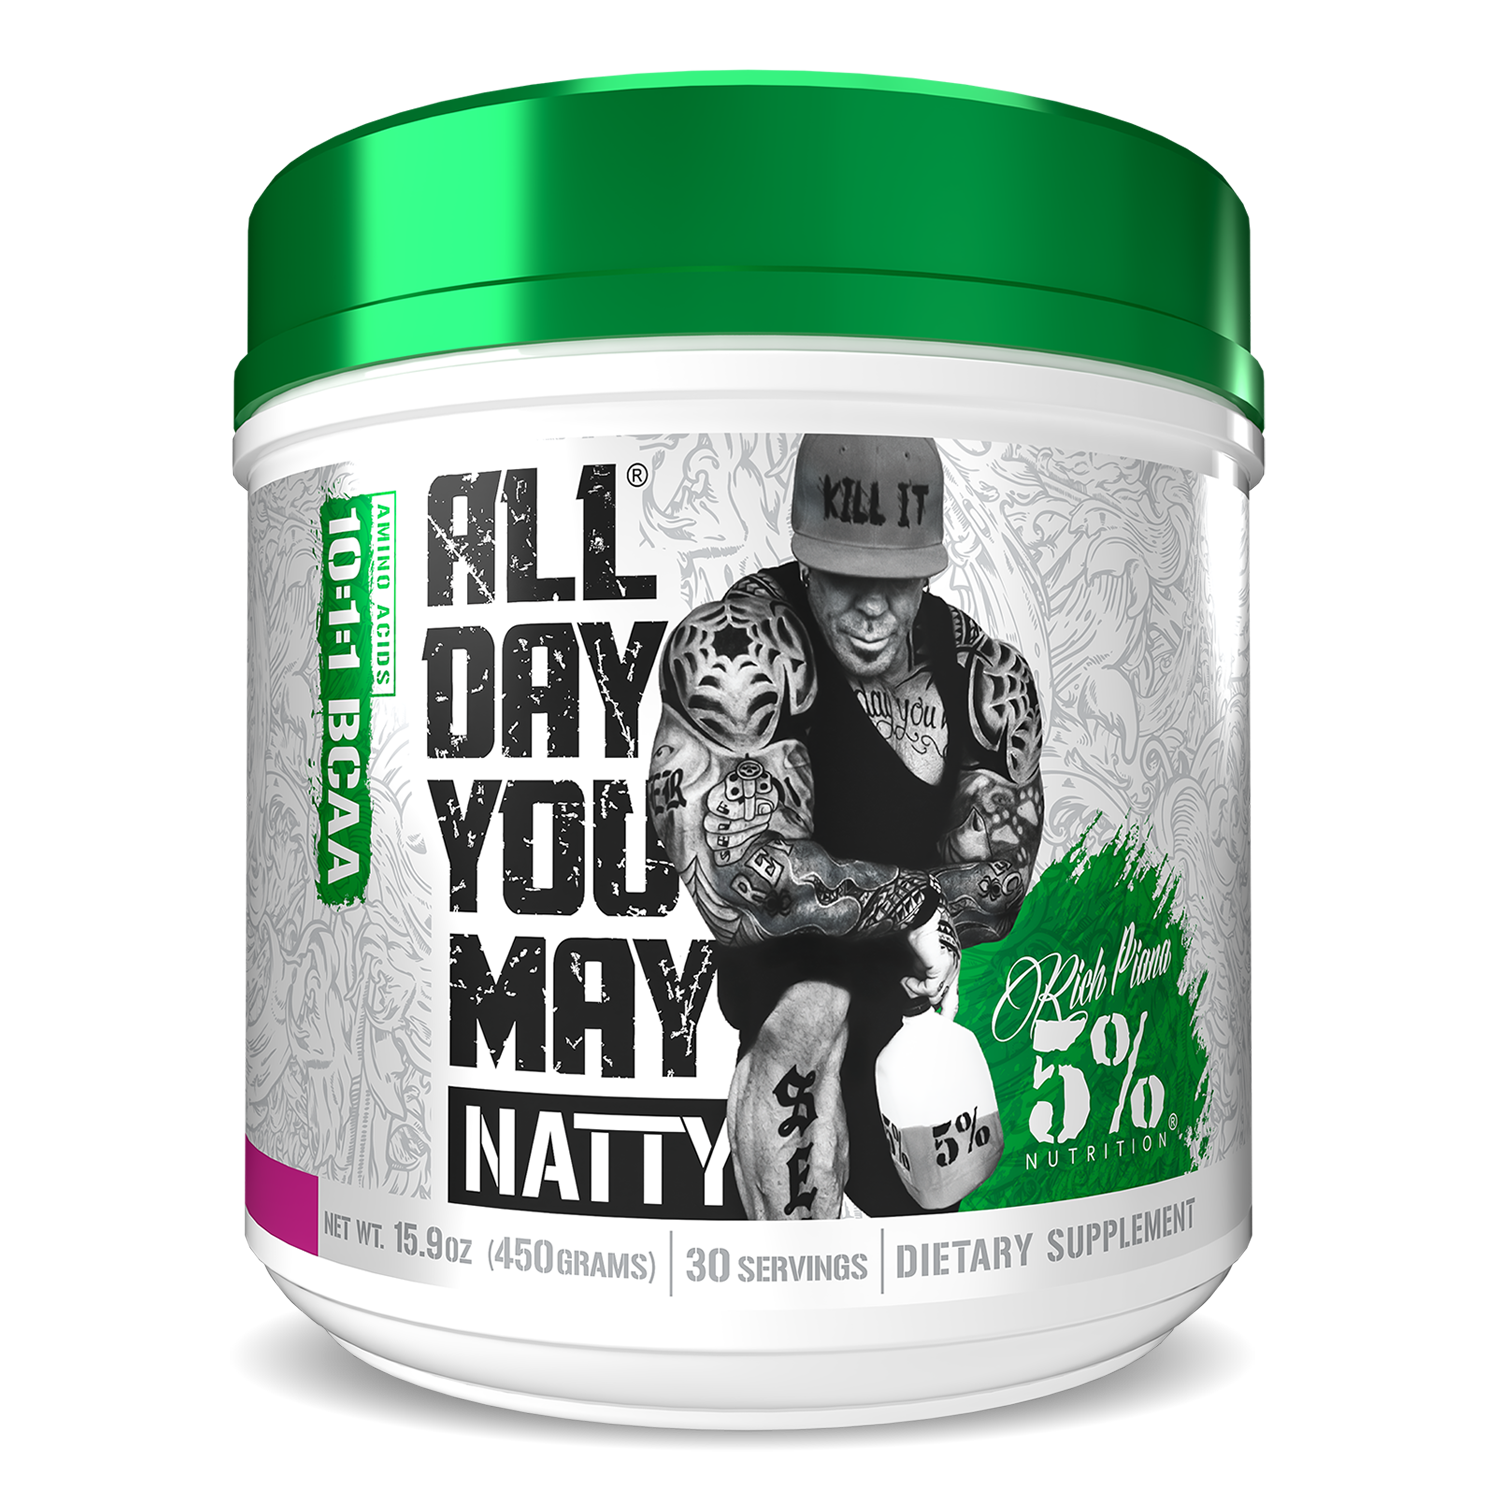 ALL DAY YOU MAY NATTY 465g strawberry lemonade - 5% Nutrition